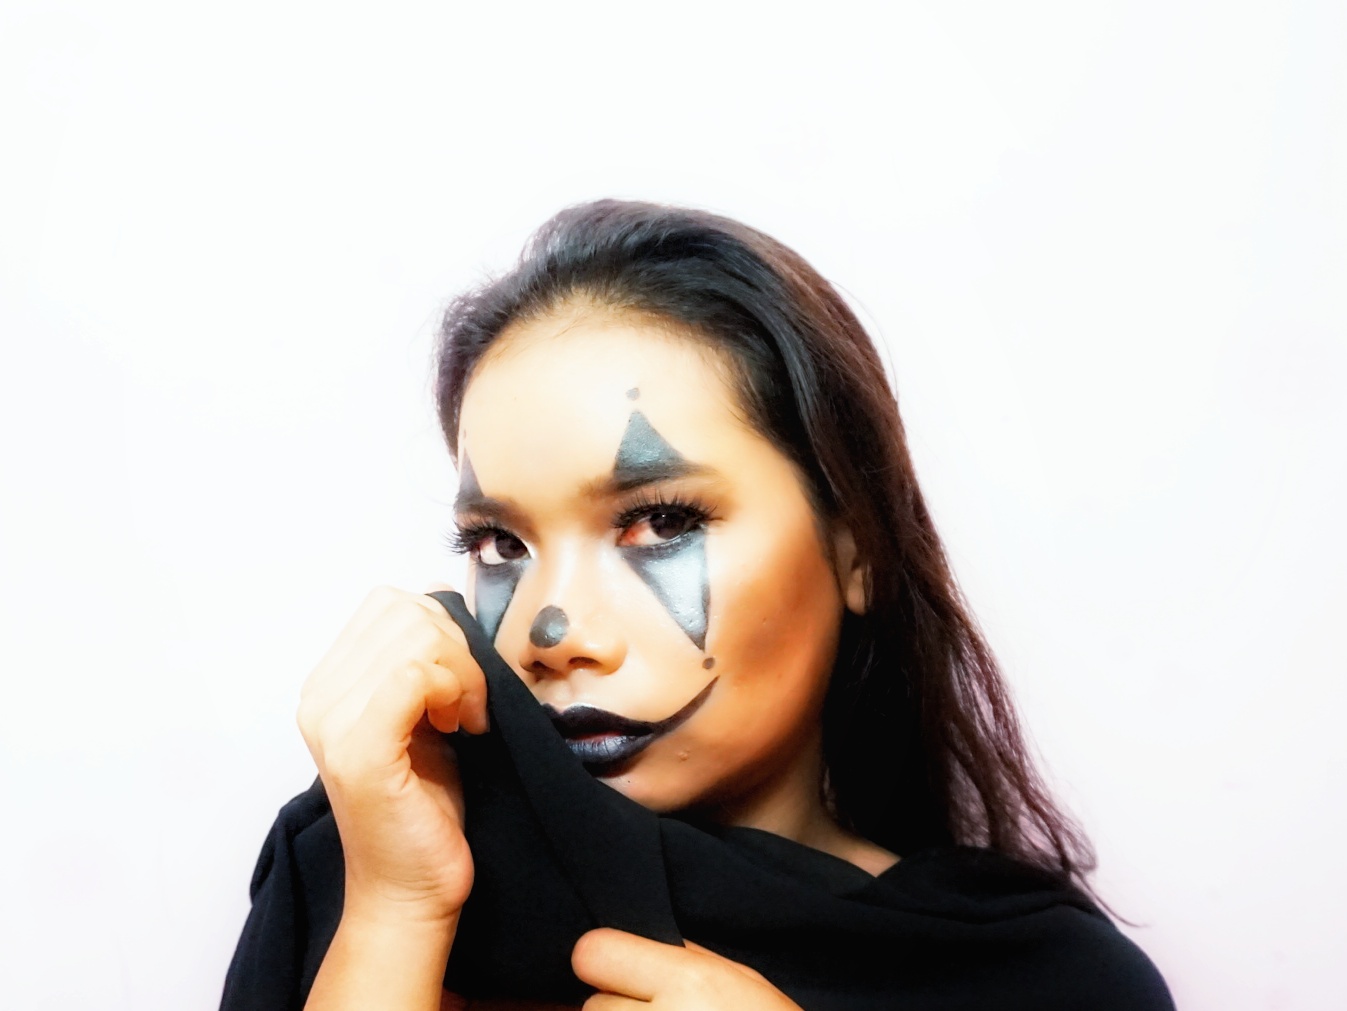 Makeup Halloween Super Gampang Freaky Clowns Rima Angel